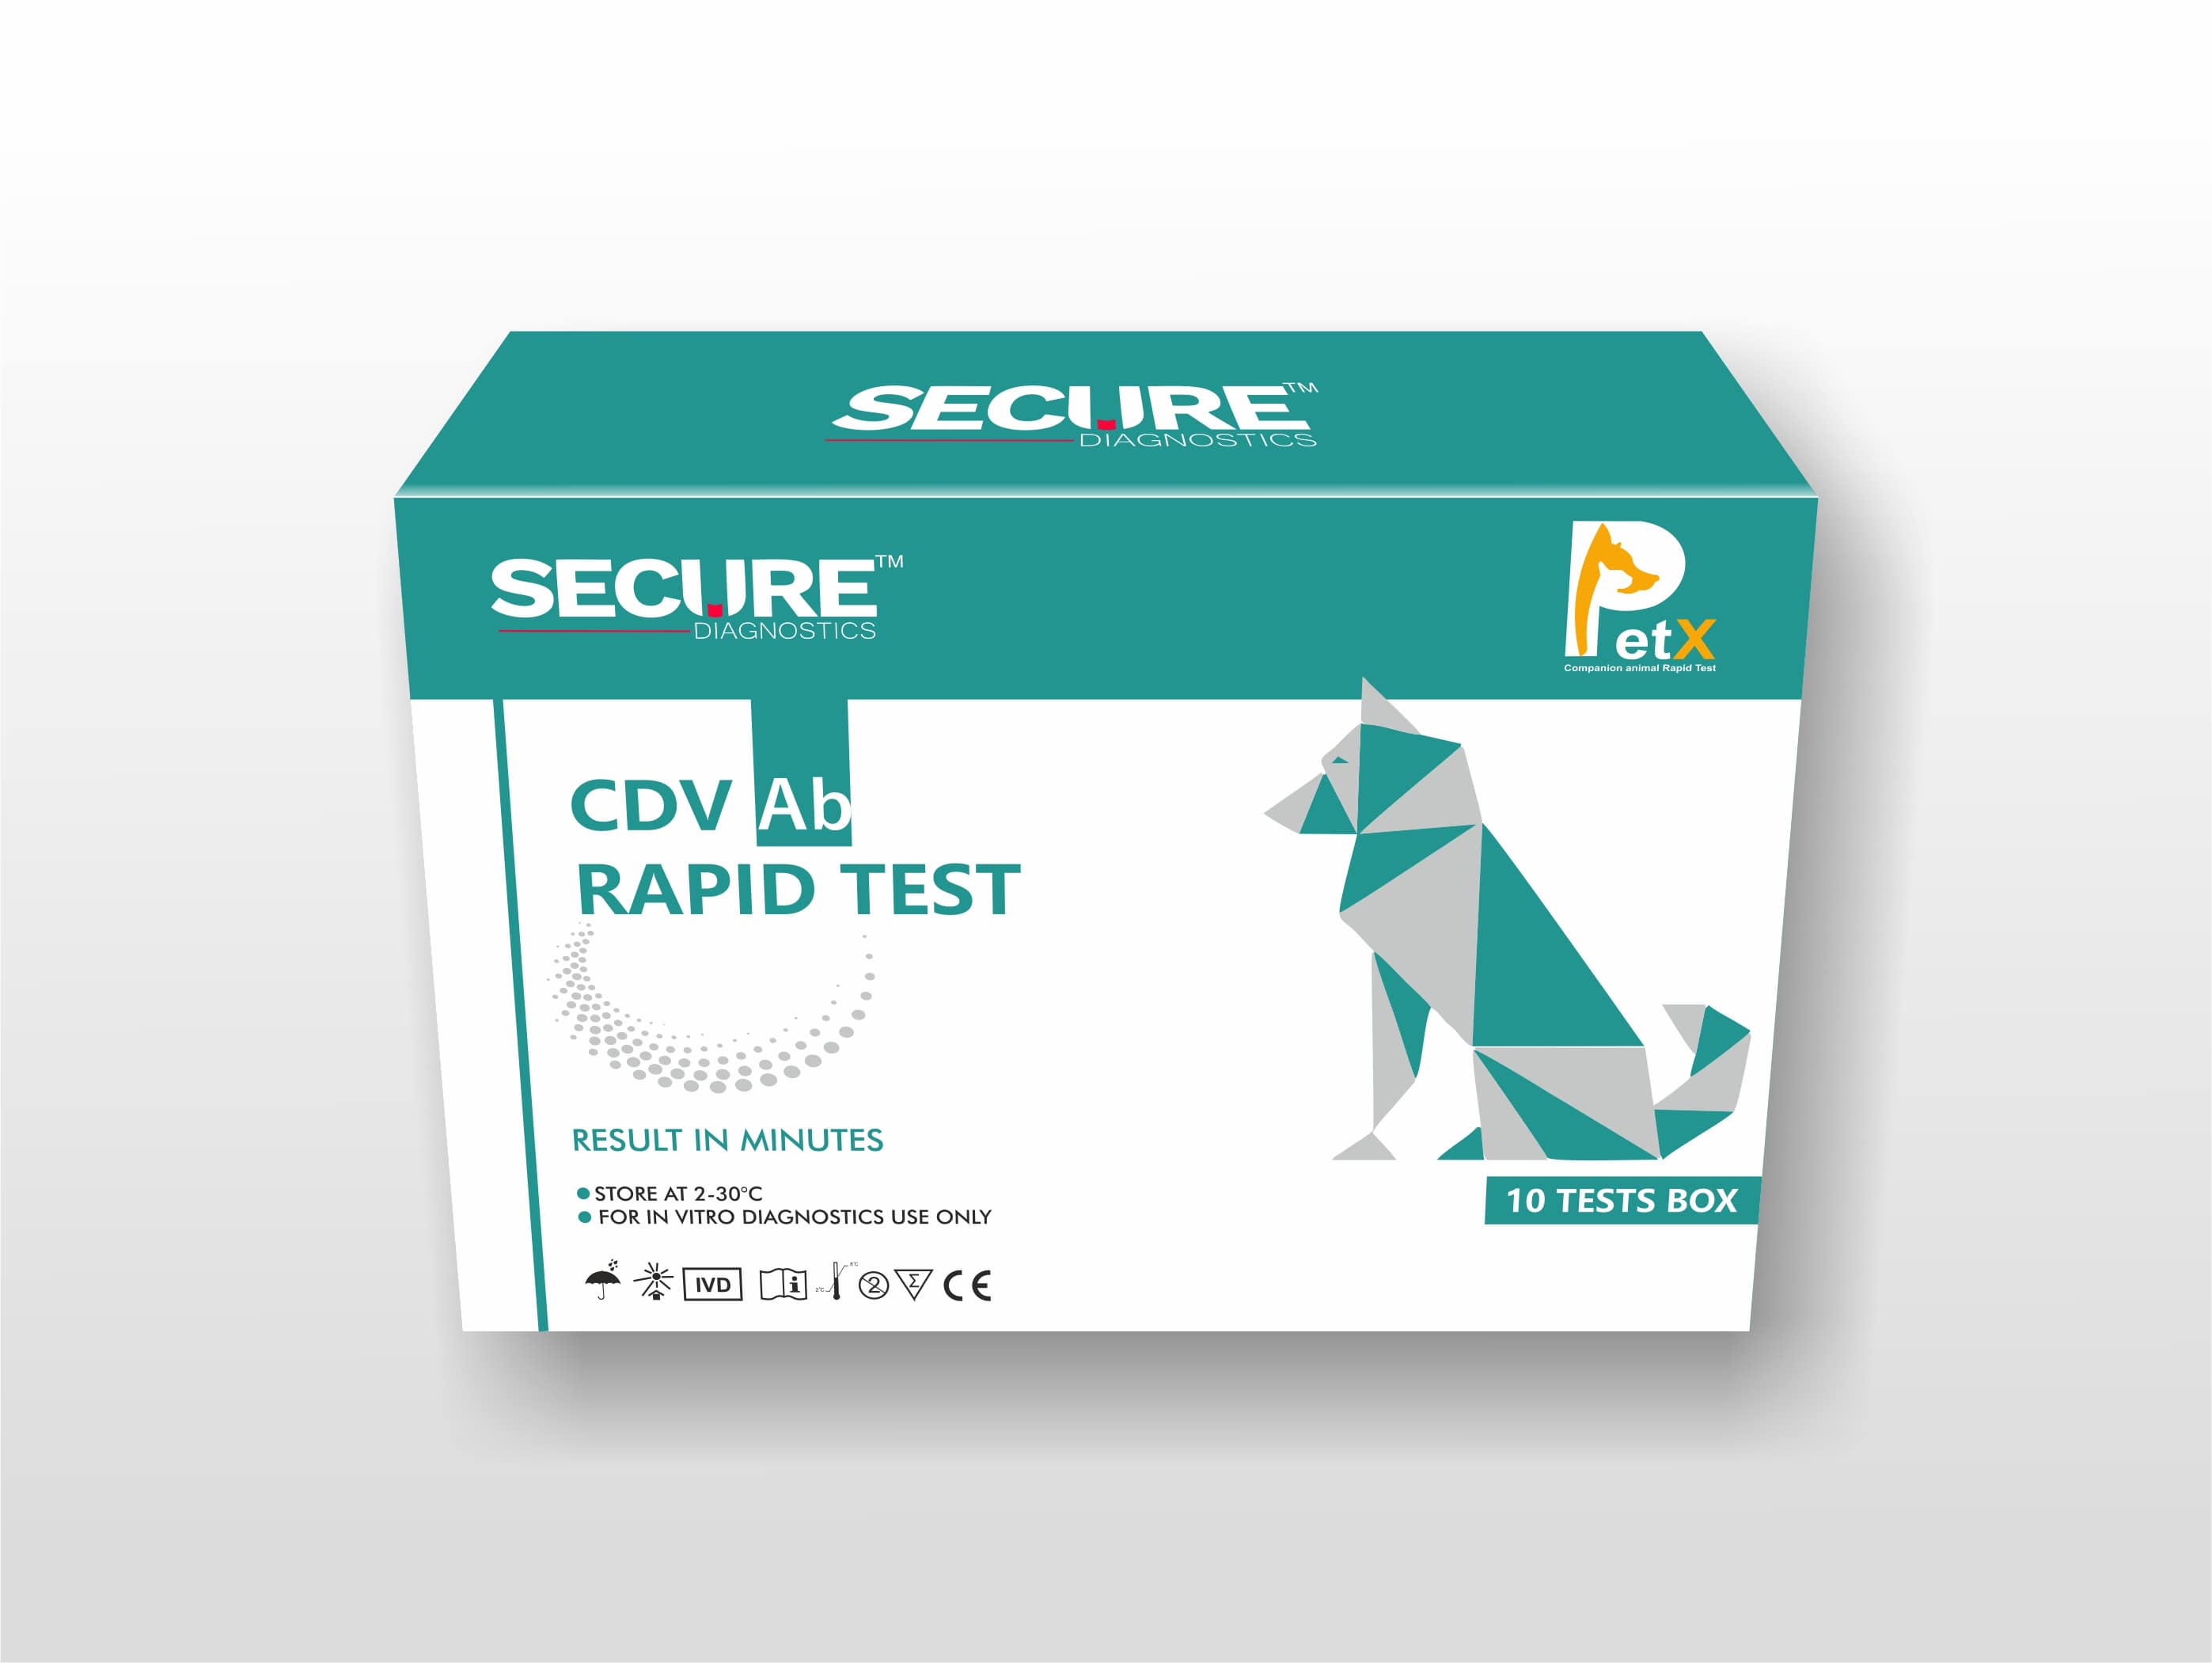 Canine Distemper virus Quantitative (CDV Ab) Antibody Test kit